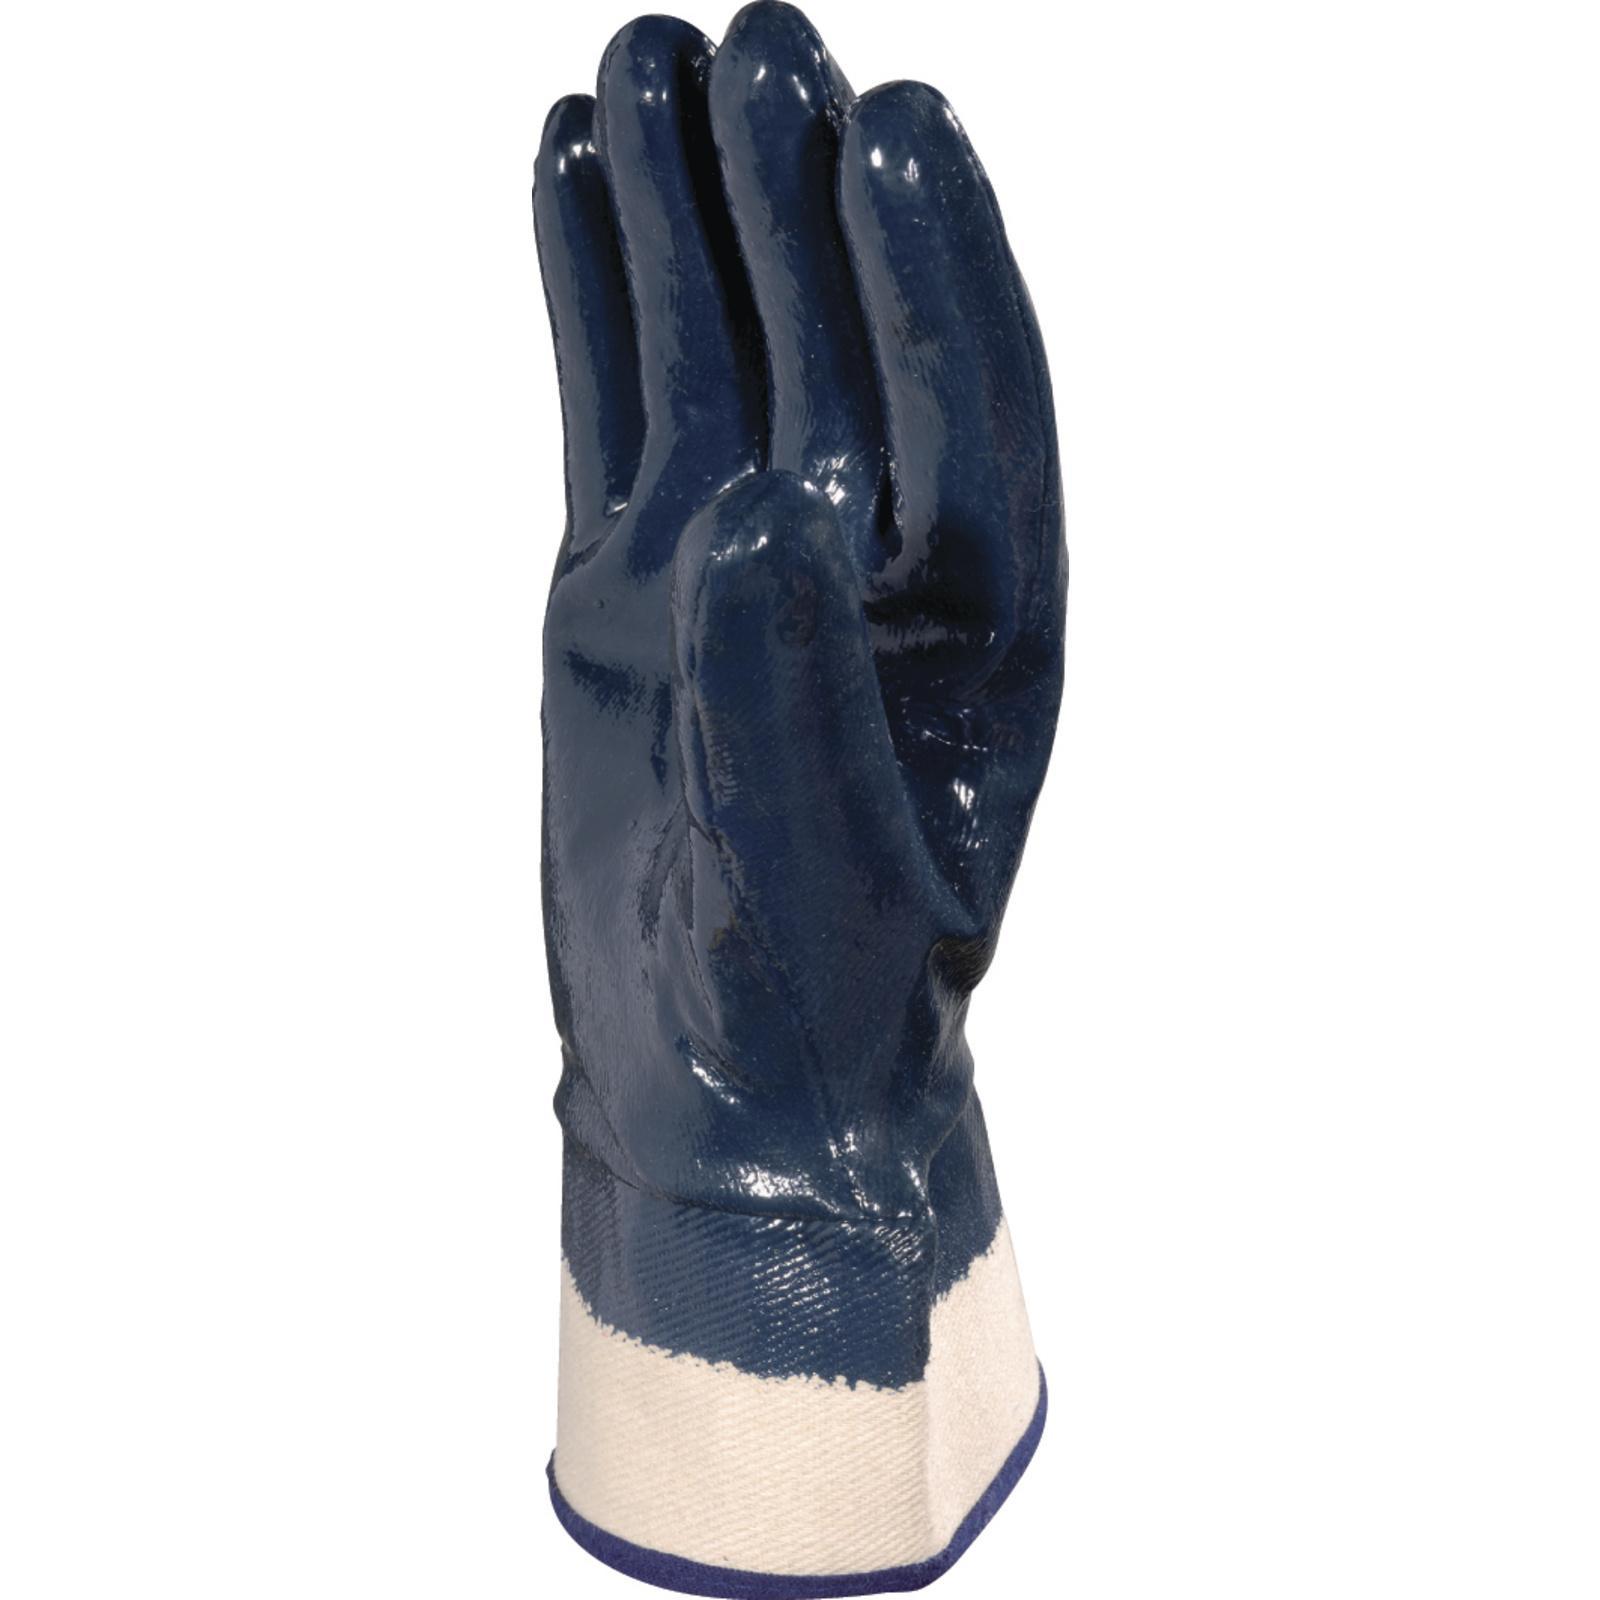 12 Pairs Delta Plus Venitex NI175 Blue Nitrile Open Cuff Work Gloves Size 9-11 